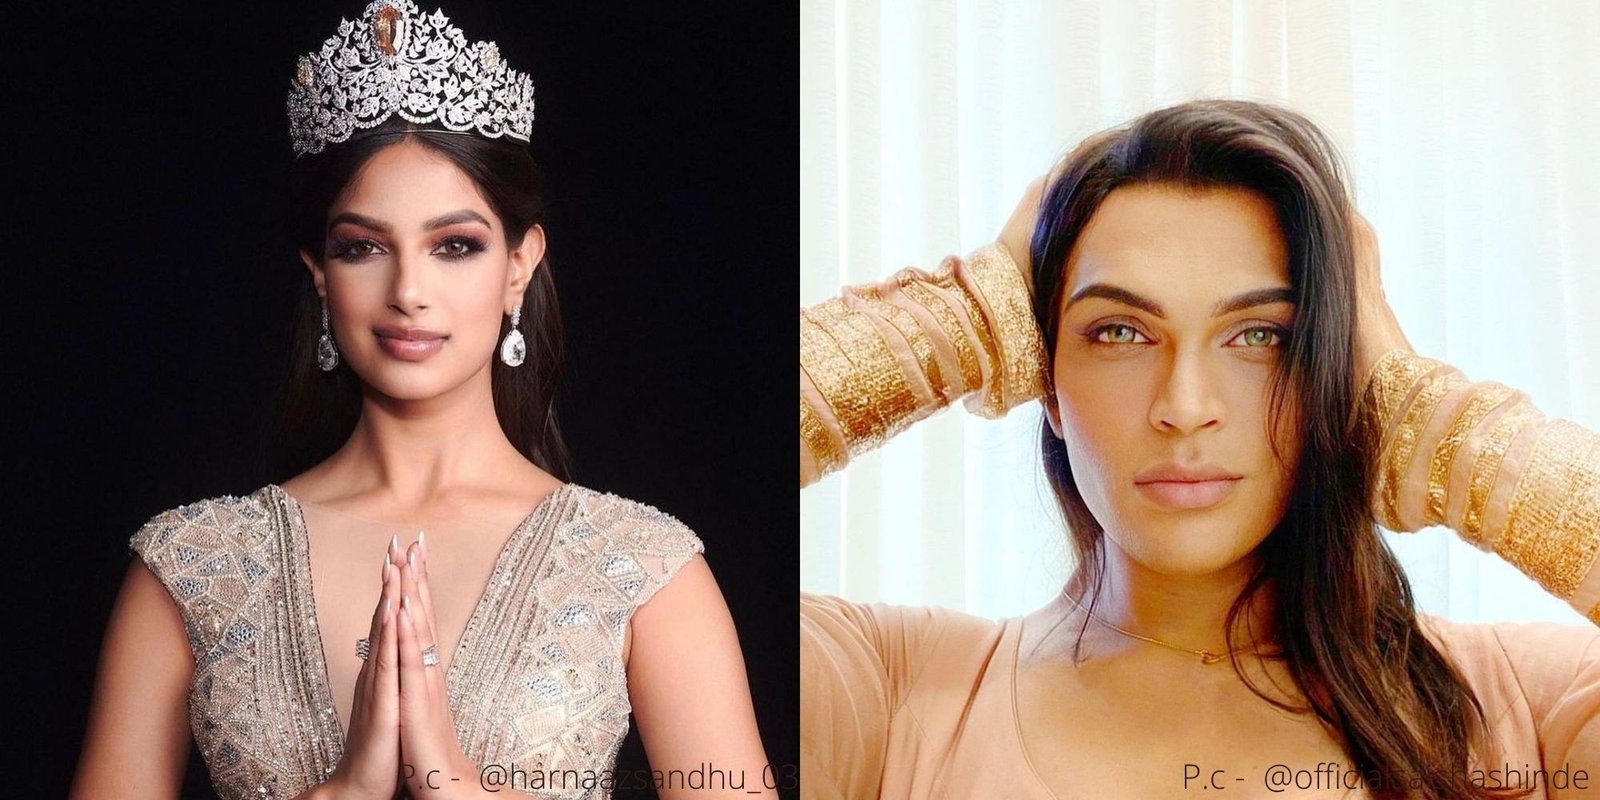 Meet the Transwoman, Saisha Shinde, who designed Harnaaz Sandhu’s Miss Universe Gown